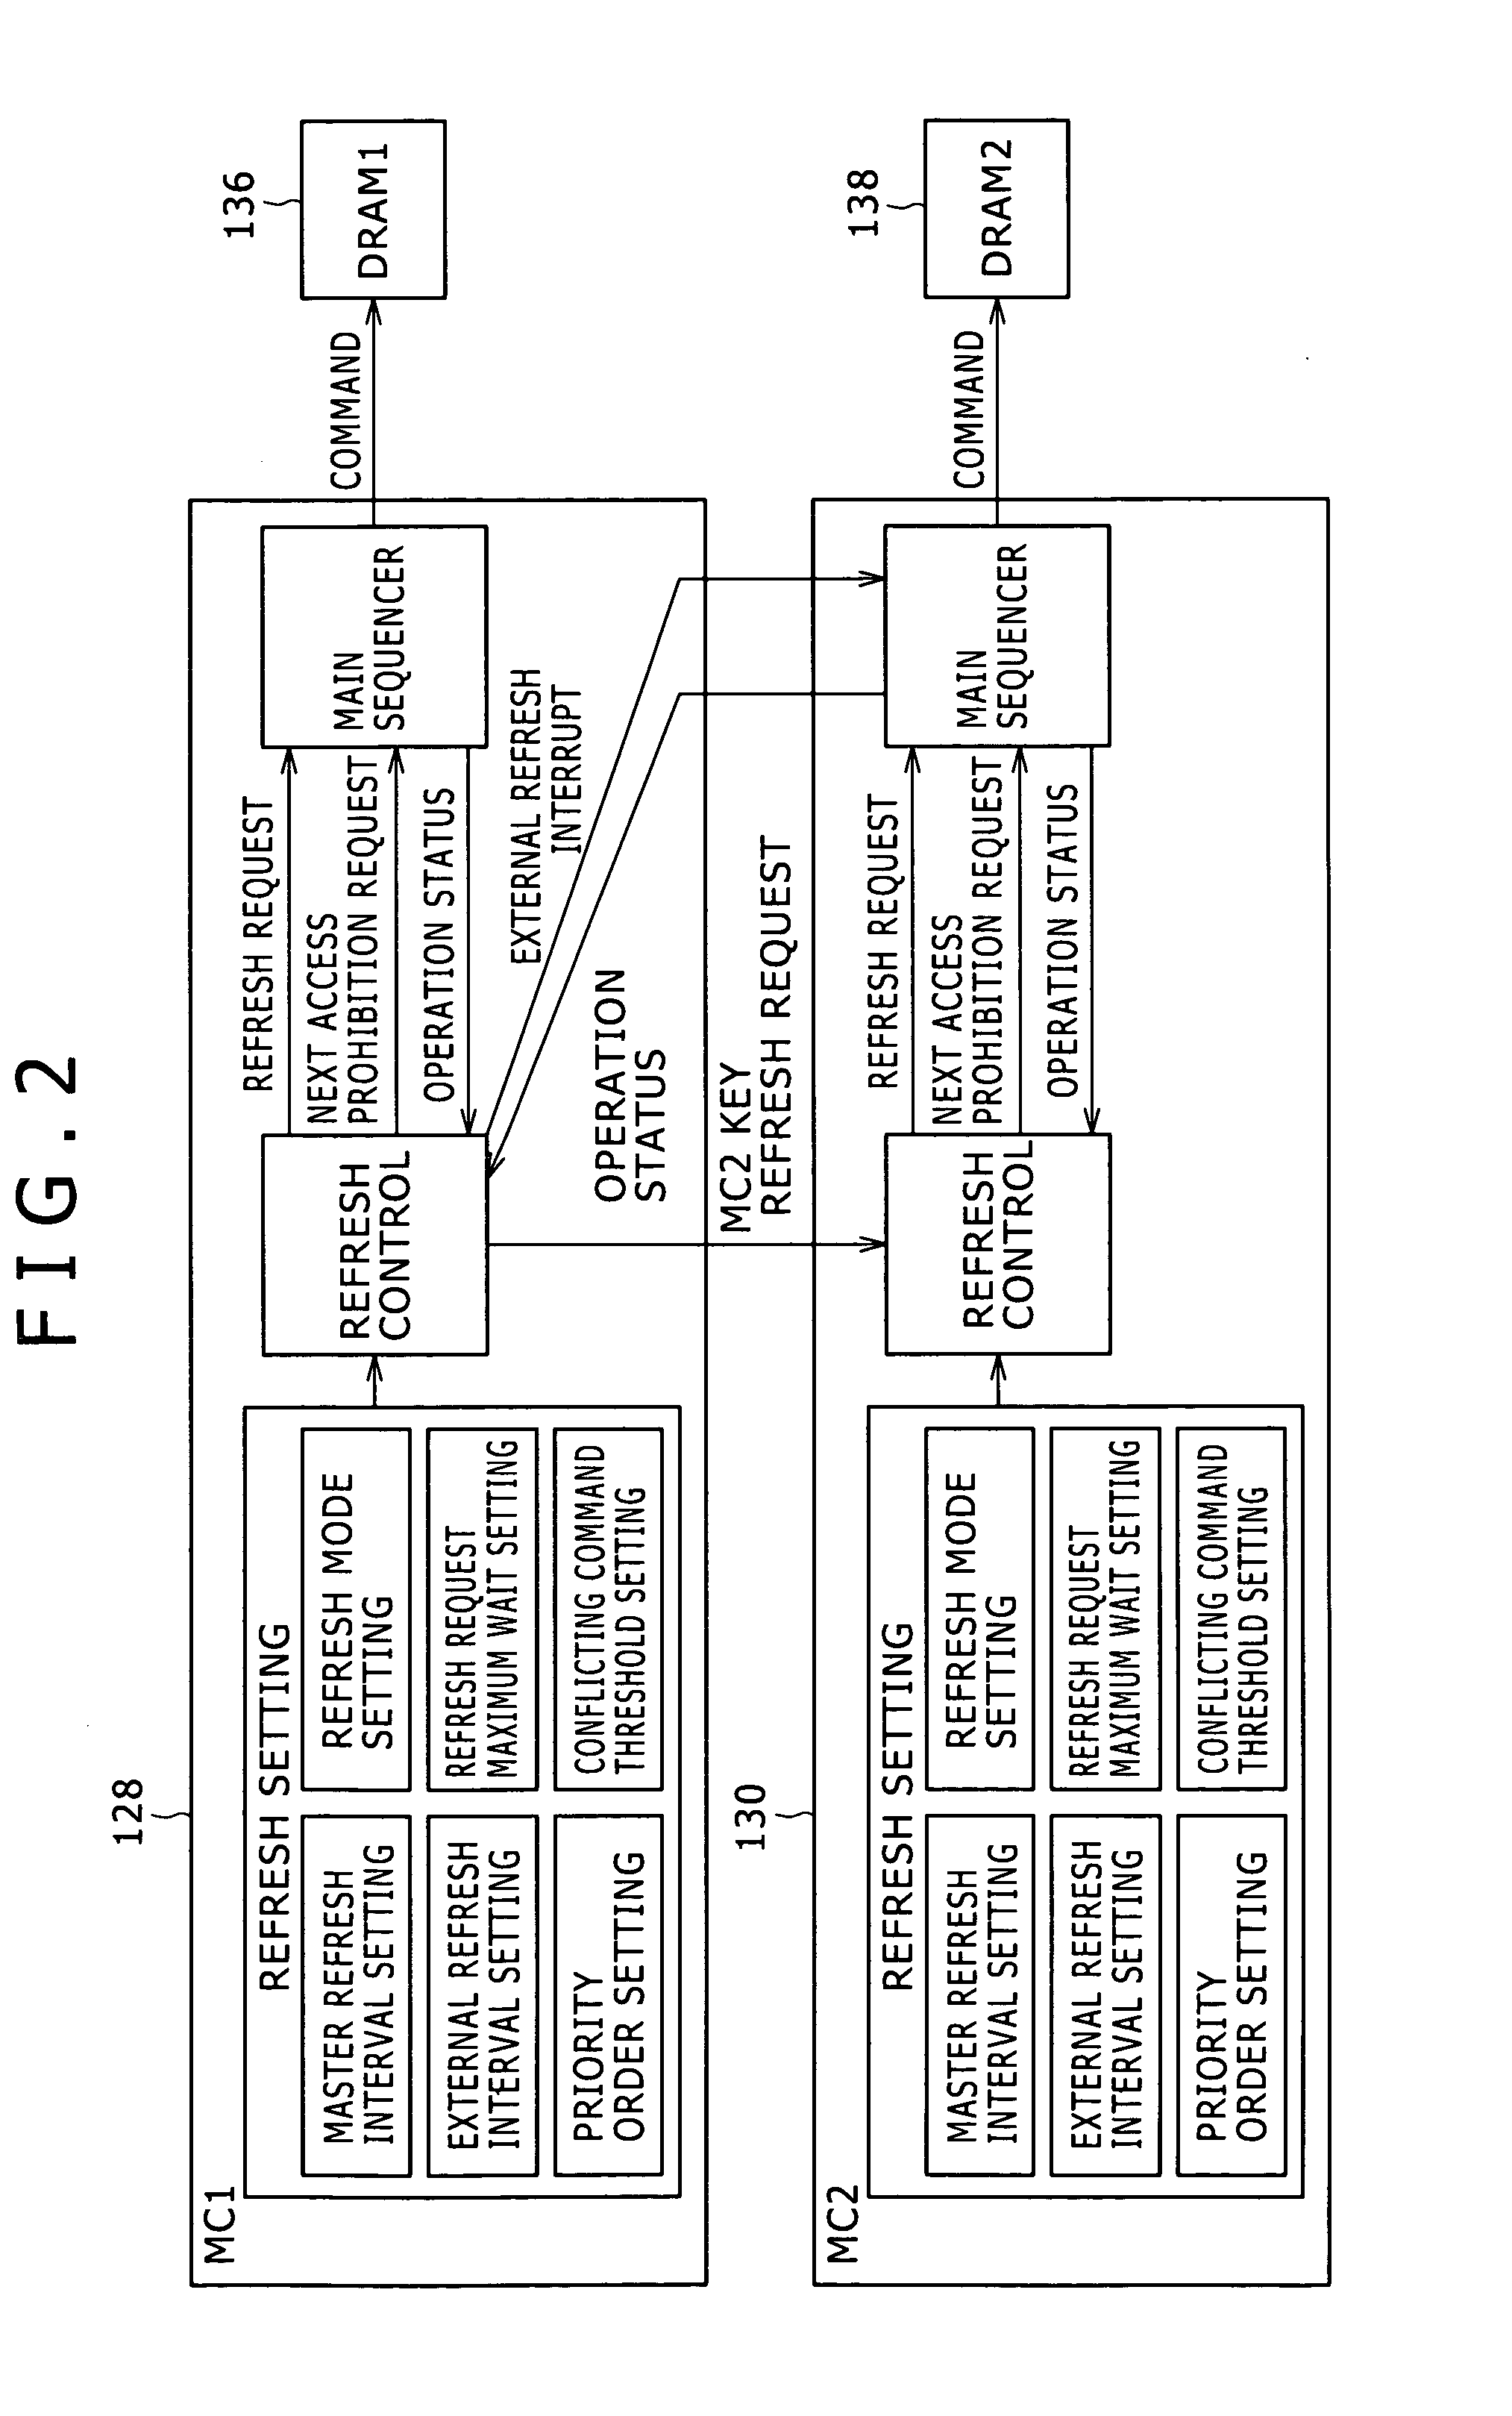 Memory control apparatus, memory control method, and computer program